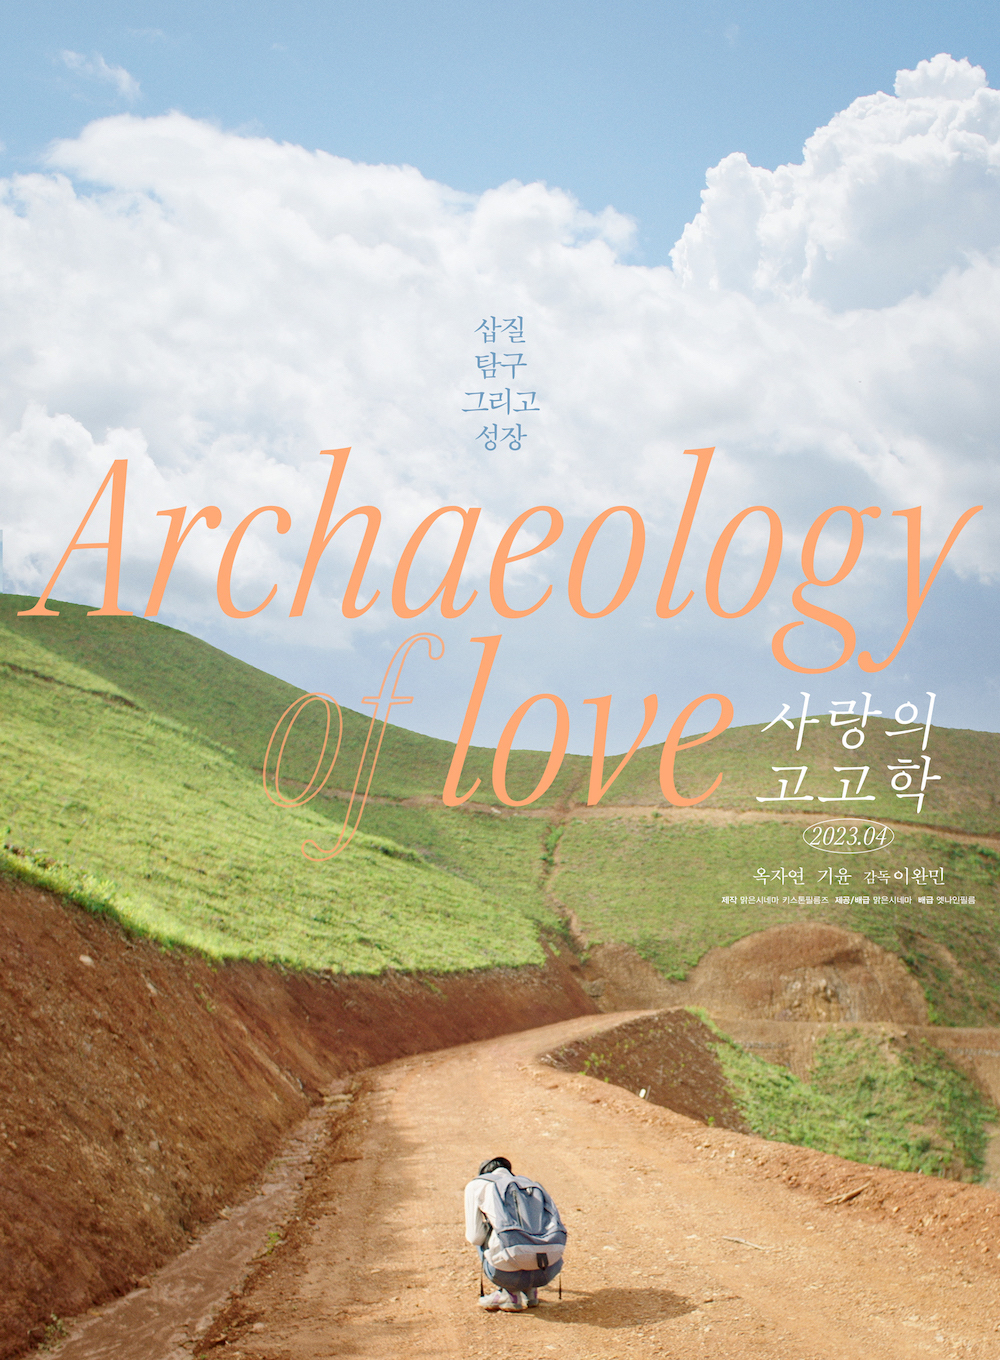 Archaeologyoflove